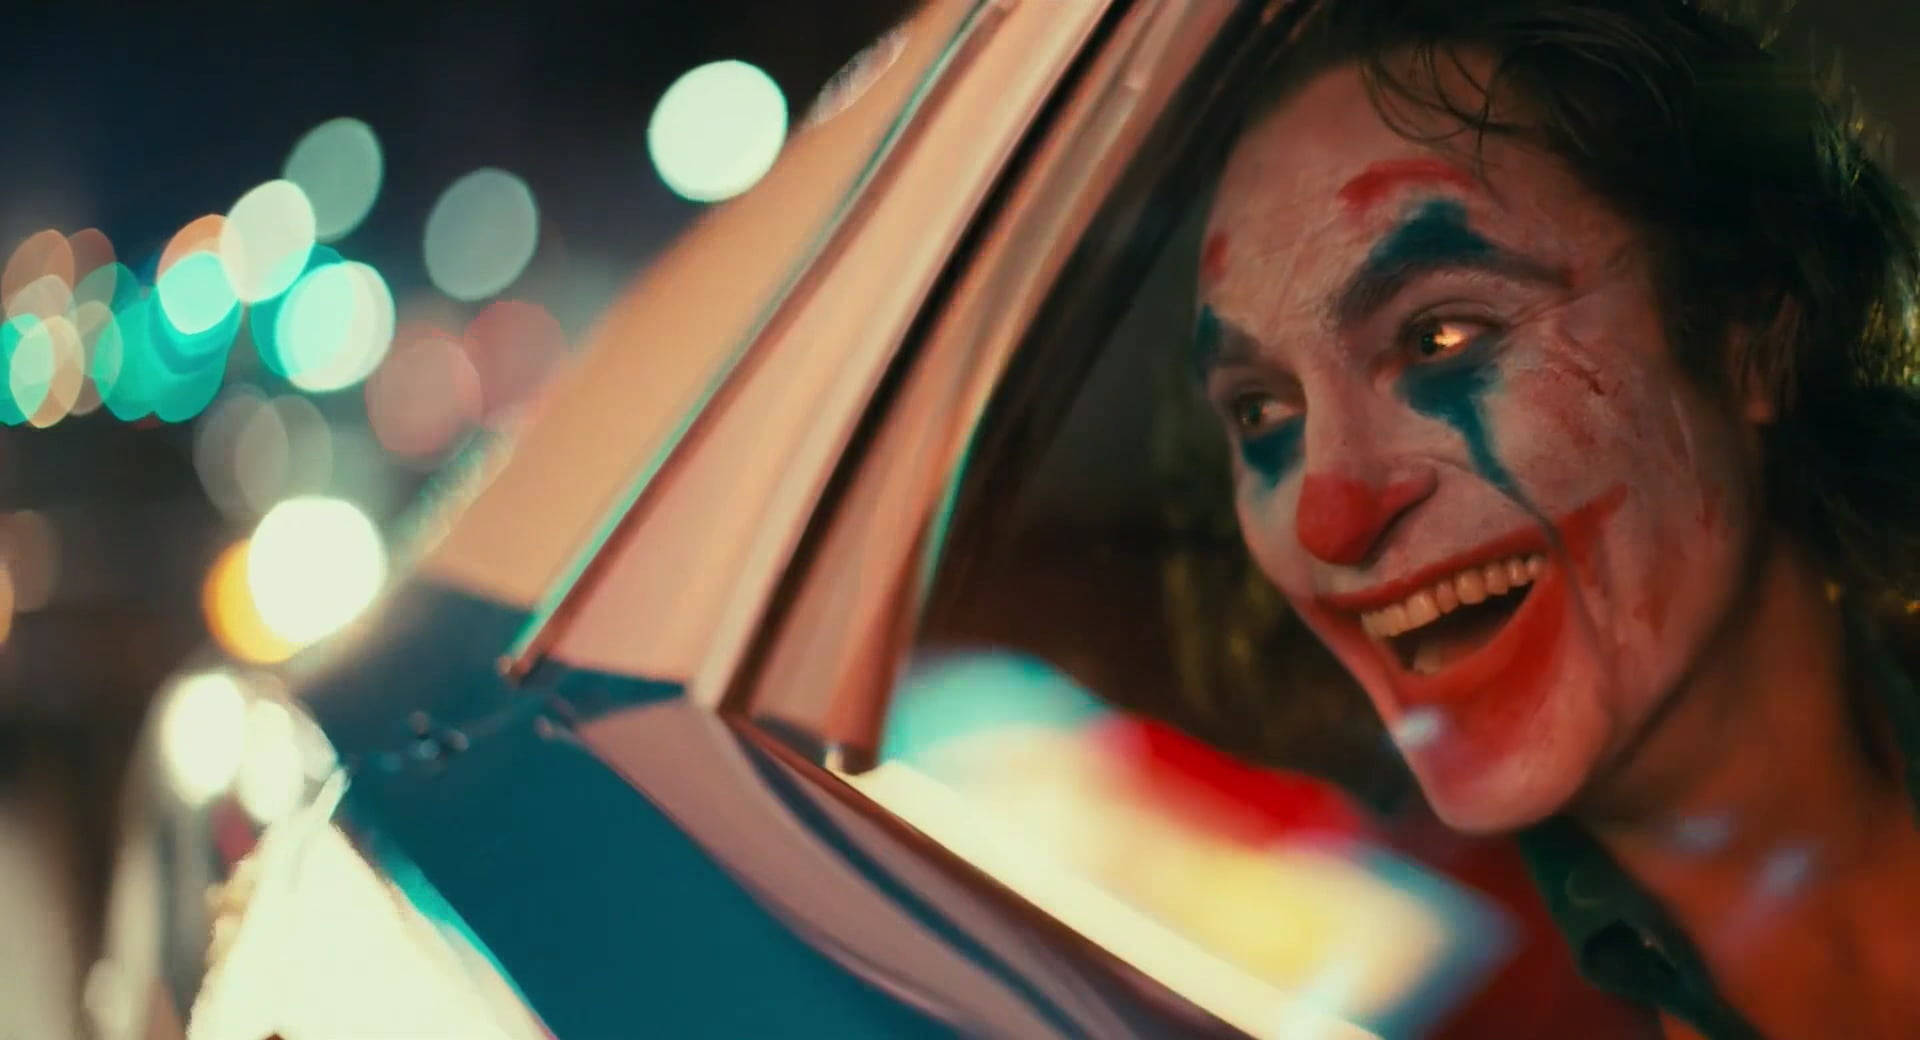 Joker 2020 From A Car's Window Wallpaper